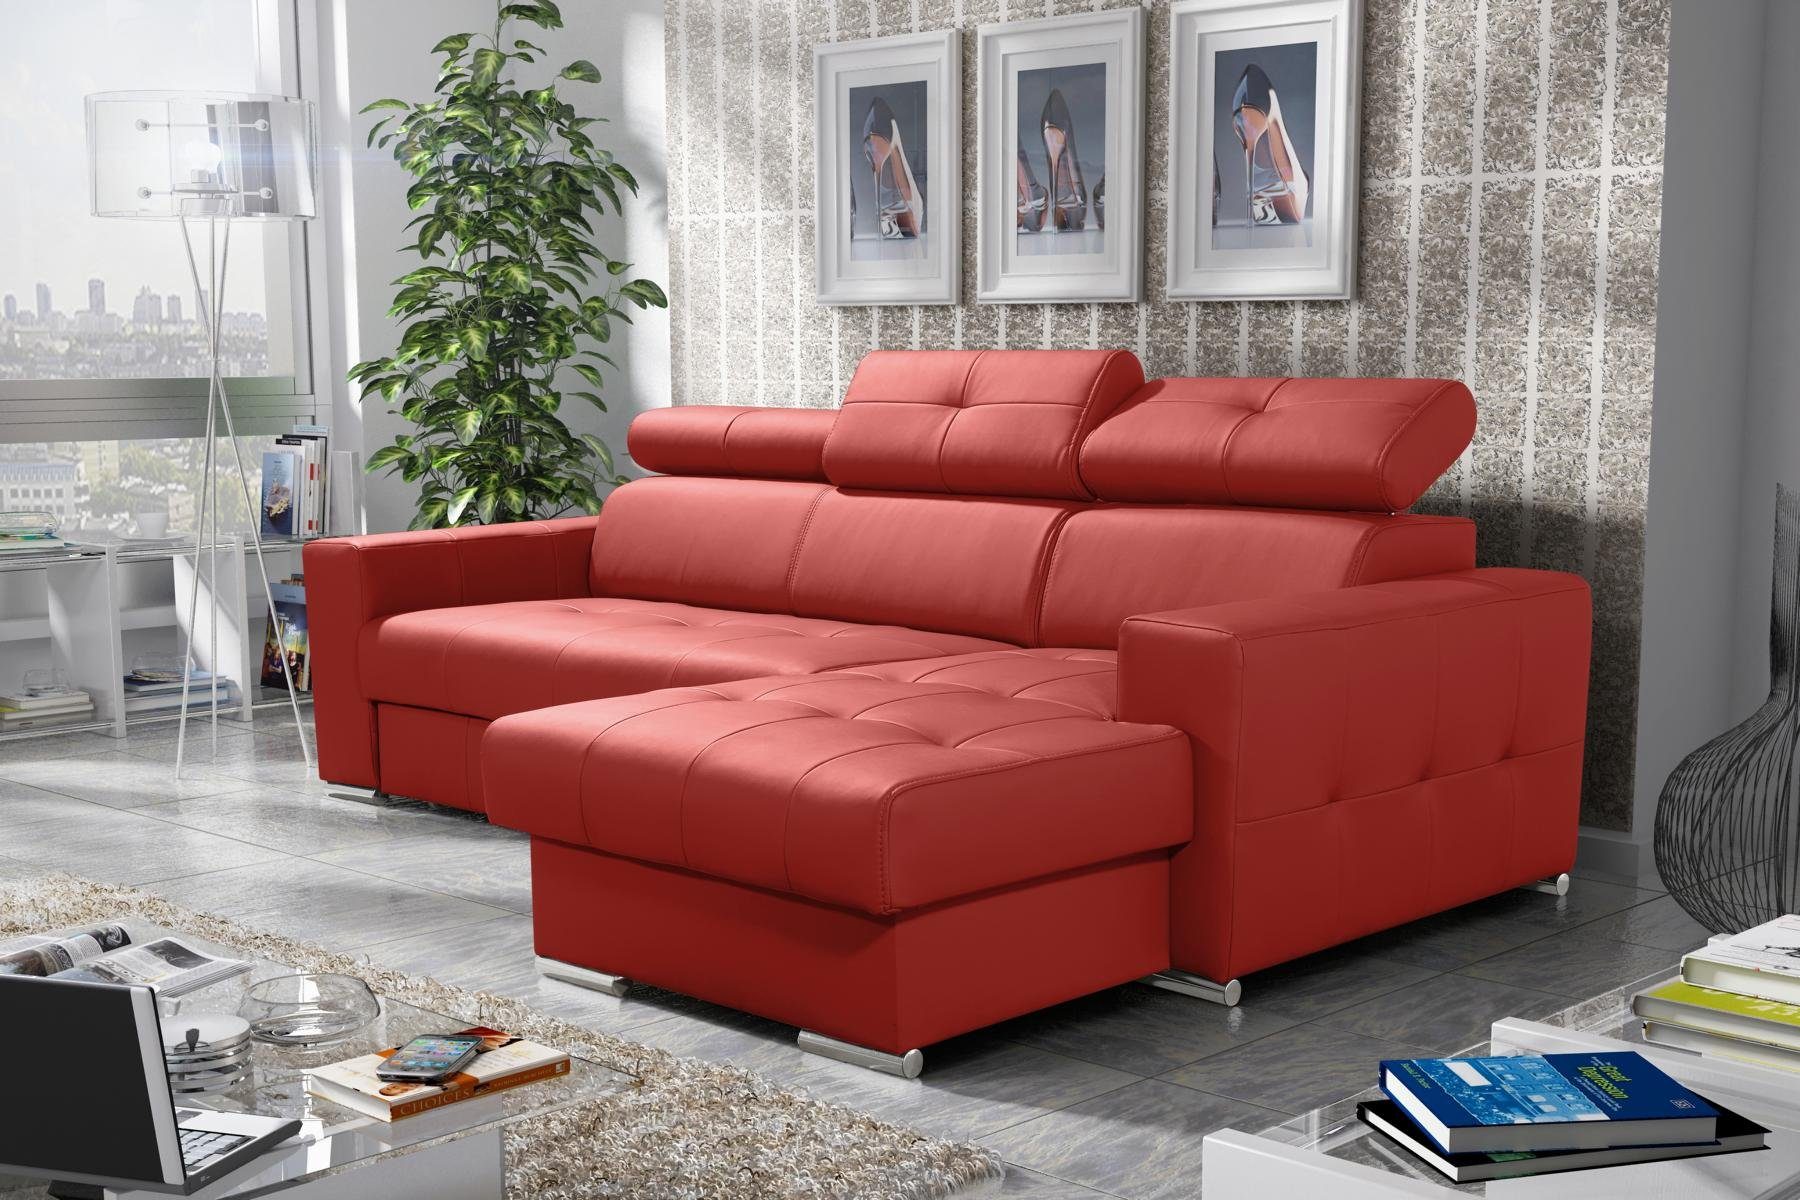 JVmoebel Ecksofa Sofa in Made Stoff Neu Leder, Europe Polsterung Rot Wohnzimmer Eckcouch L-Form